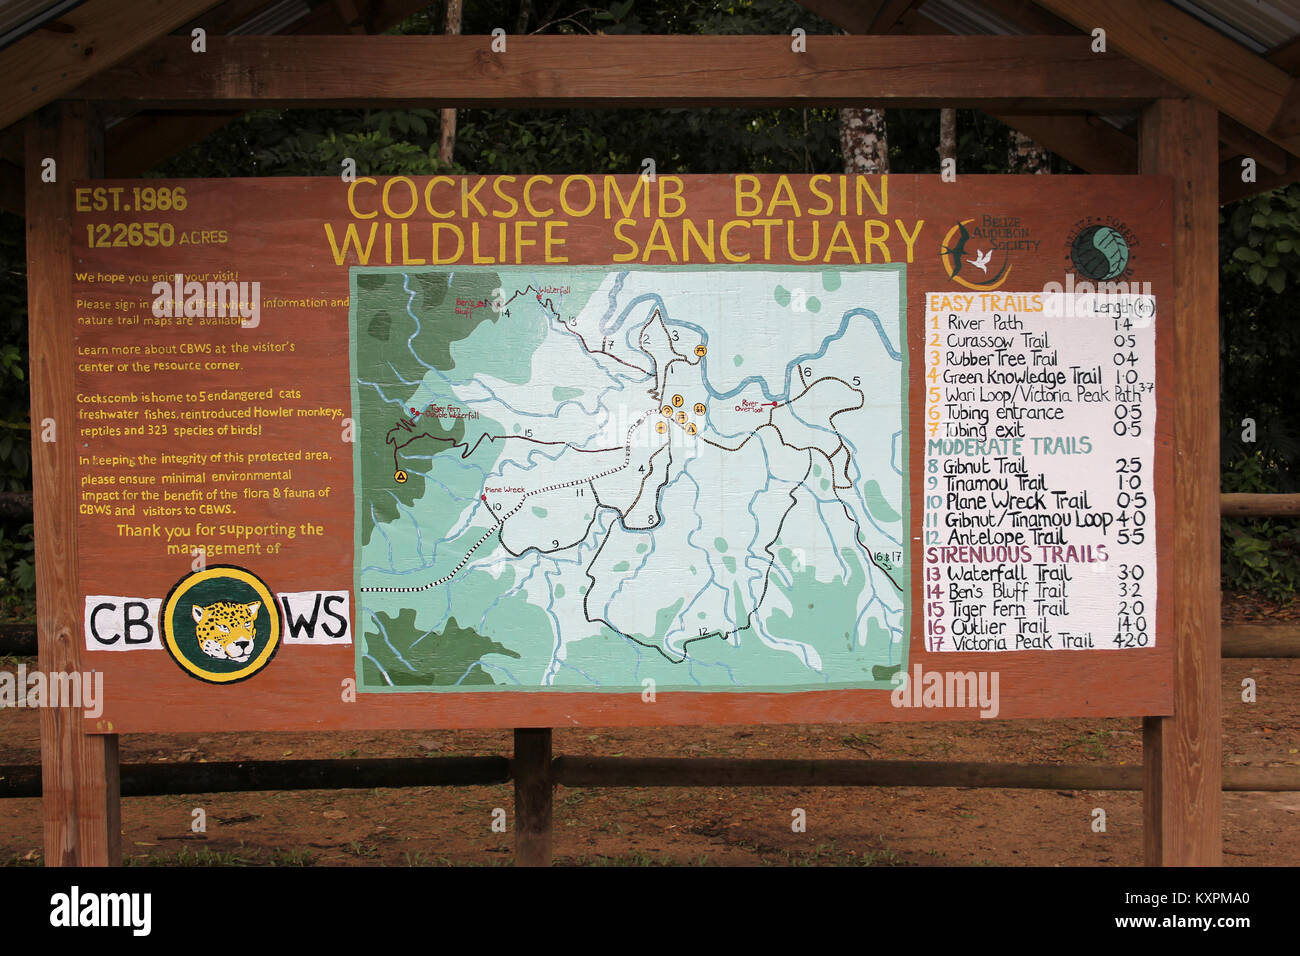 Cockscomb Basin Wildlife Sanctuary Trail Map Stock Photo